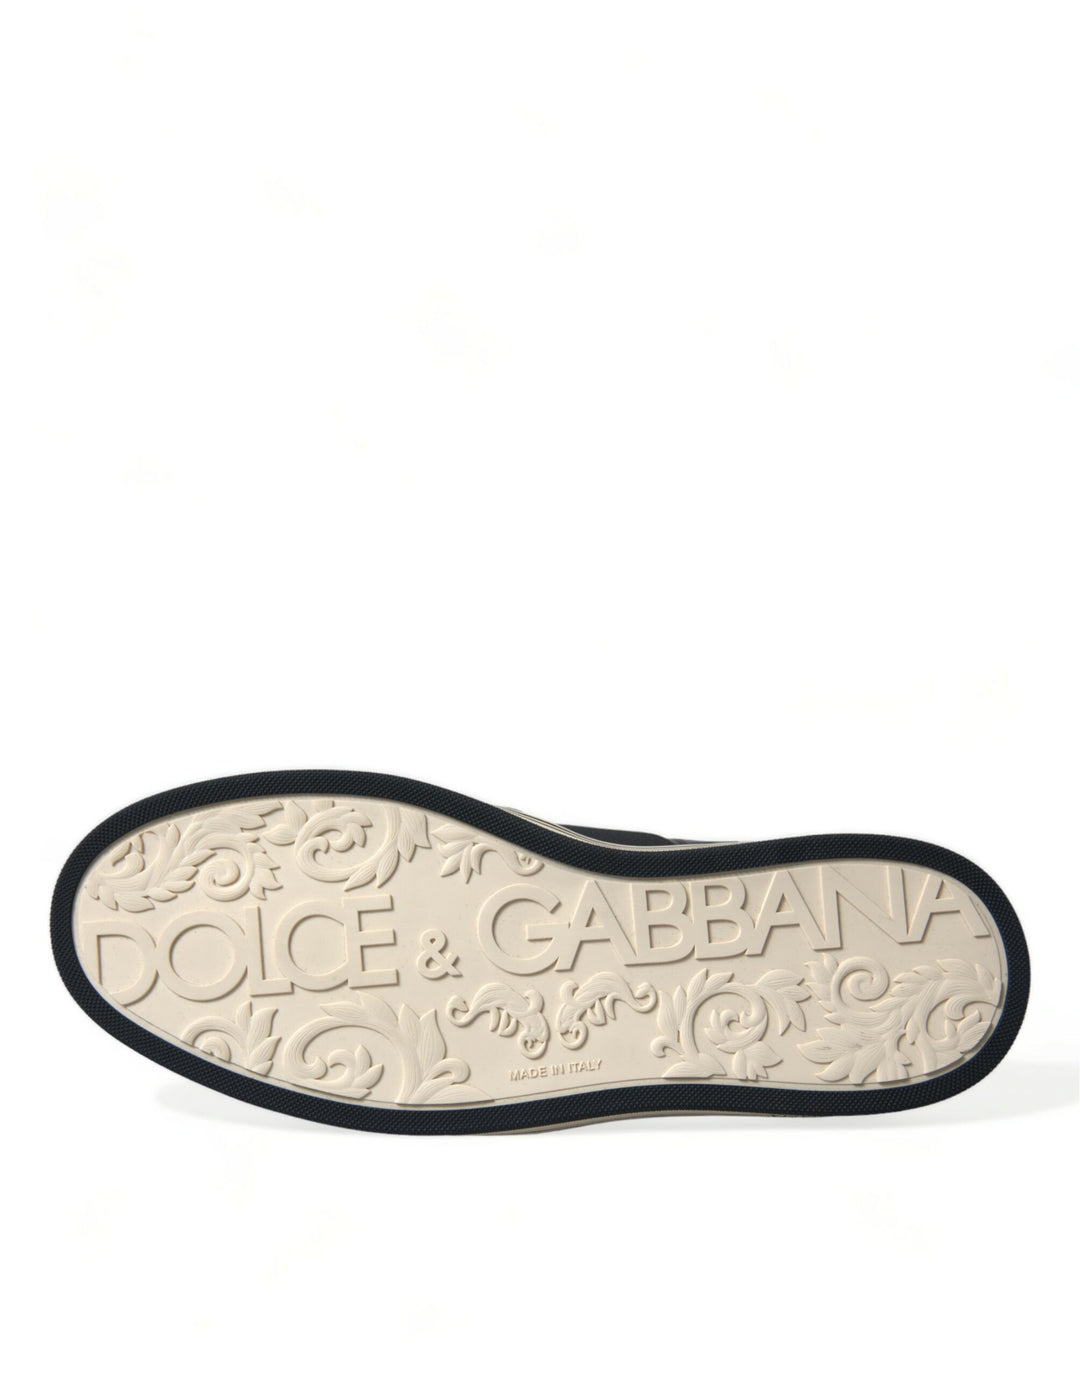 Dolce & Gabbana Elegant Crocodile Leather Low-Top Sneakers